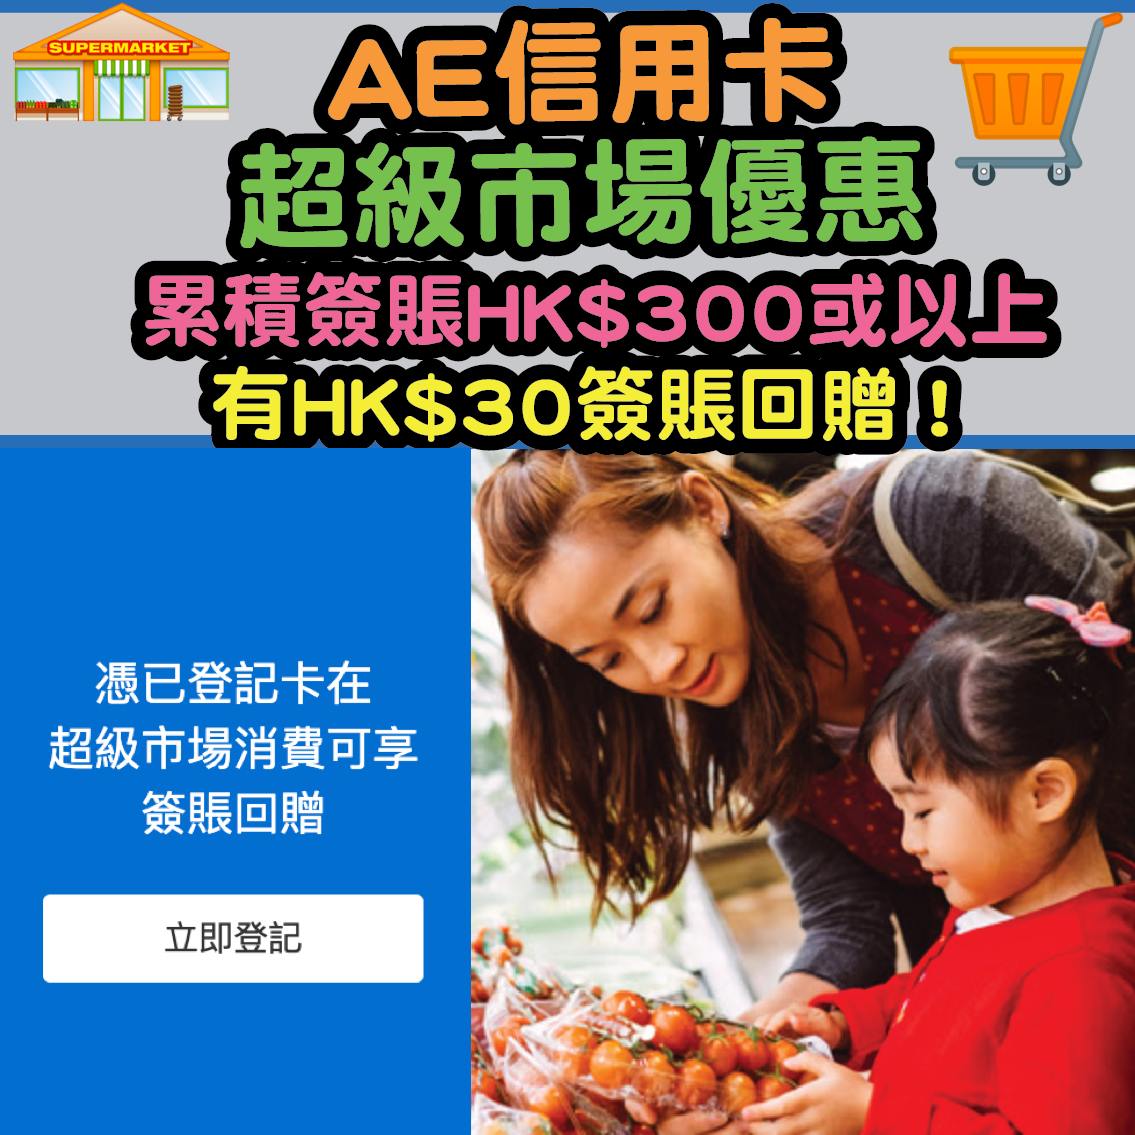 【AE信用卡超級市場優惠】累積簽賬HK$300或以上，就有HK$30簽賬回贈！仲可以逐張AE卡咁抵！